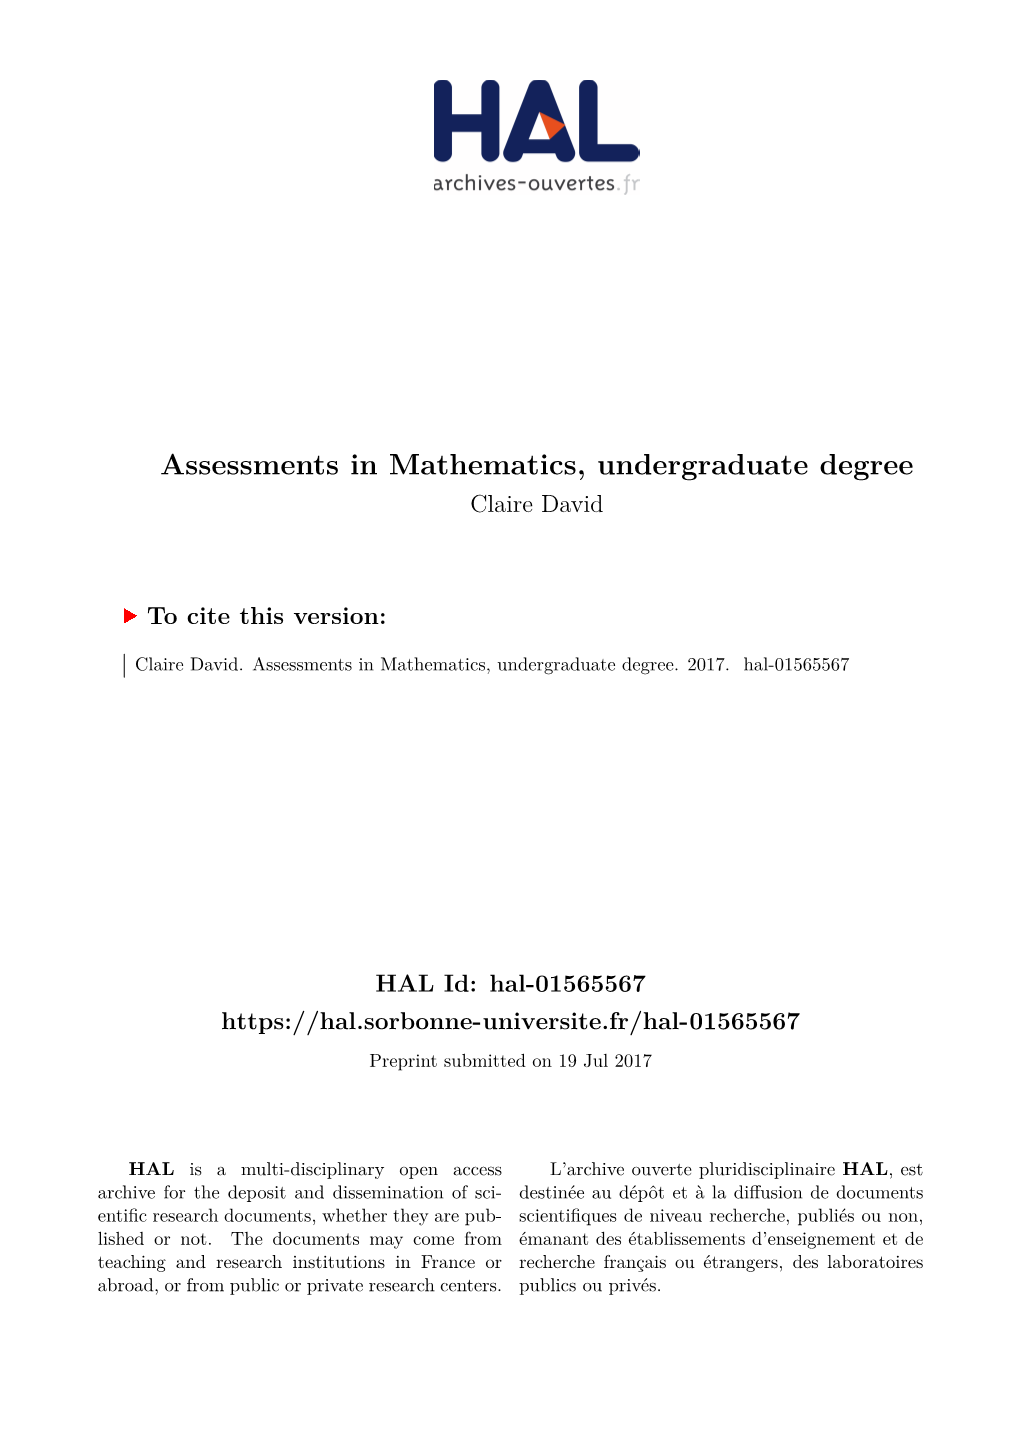 Assessments in Mathematics, Undergraduate Degree Claire David